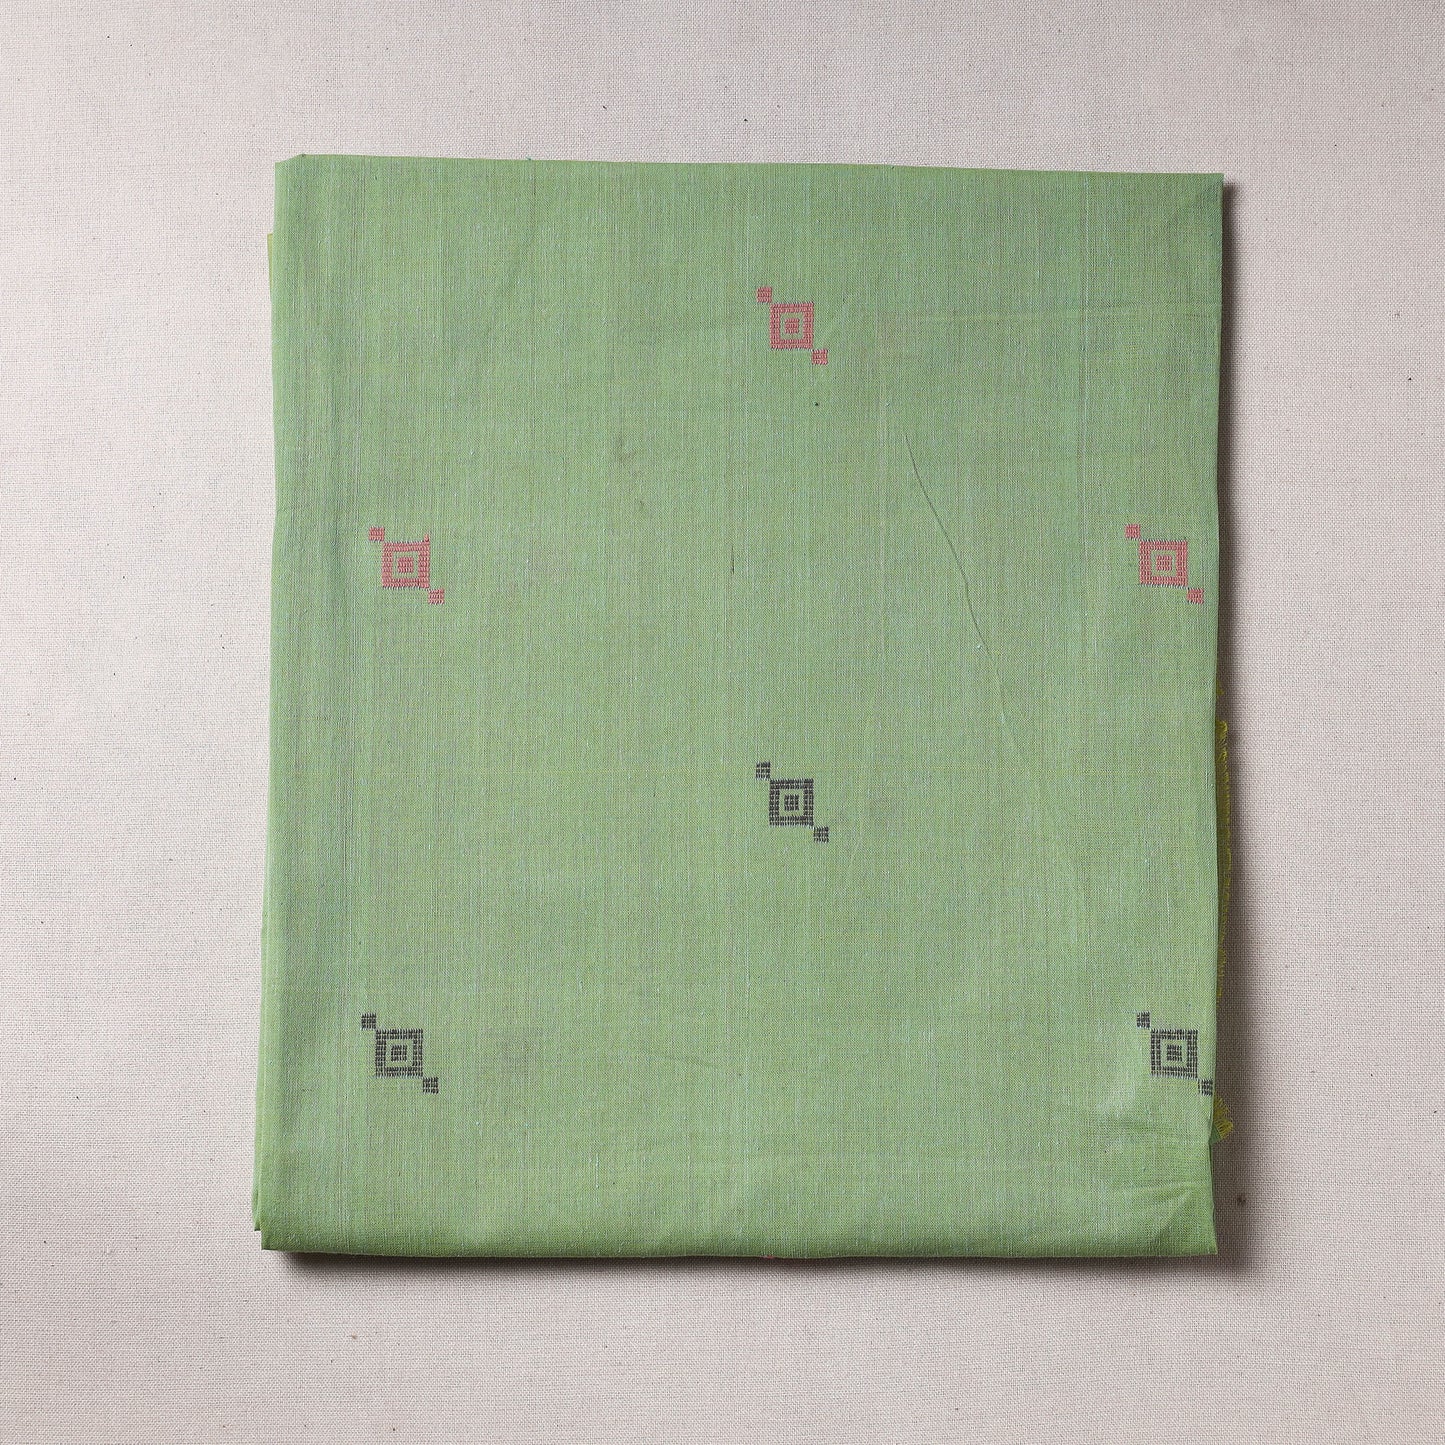 Green - Godavari Jamdani Pure Handloom Cotton Precut Fabric